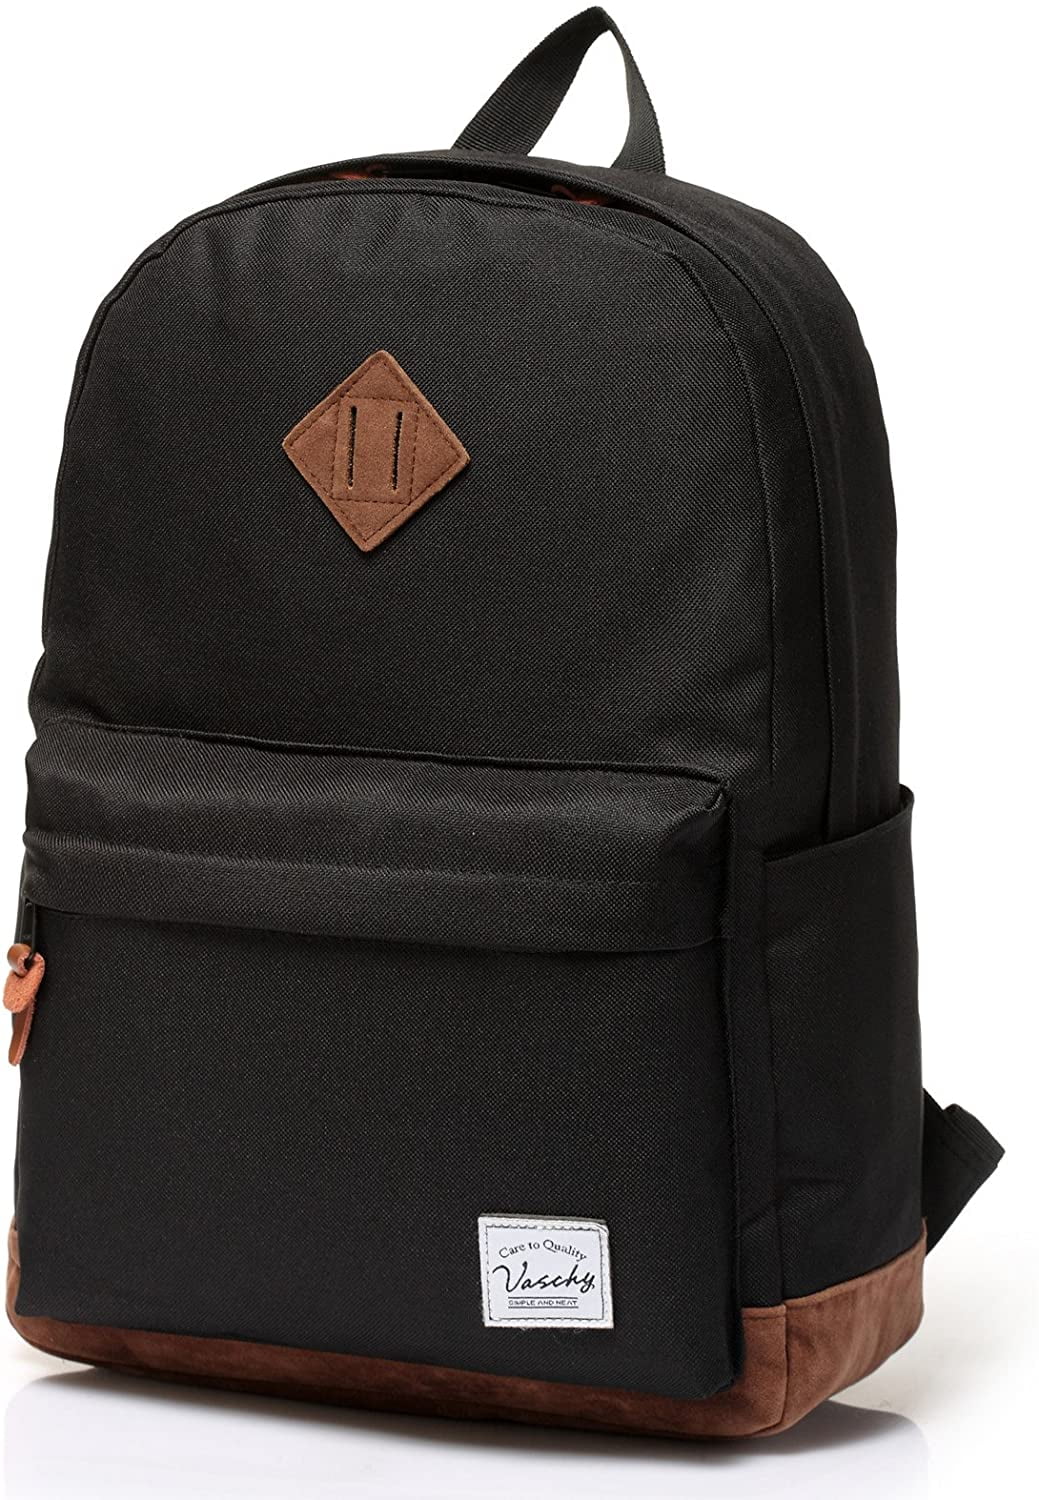 School Backpack Lightweight Black 1 Unisex Classic Backpack for Men Women 